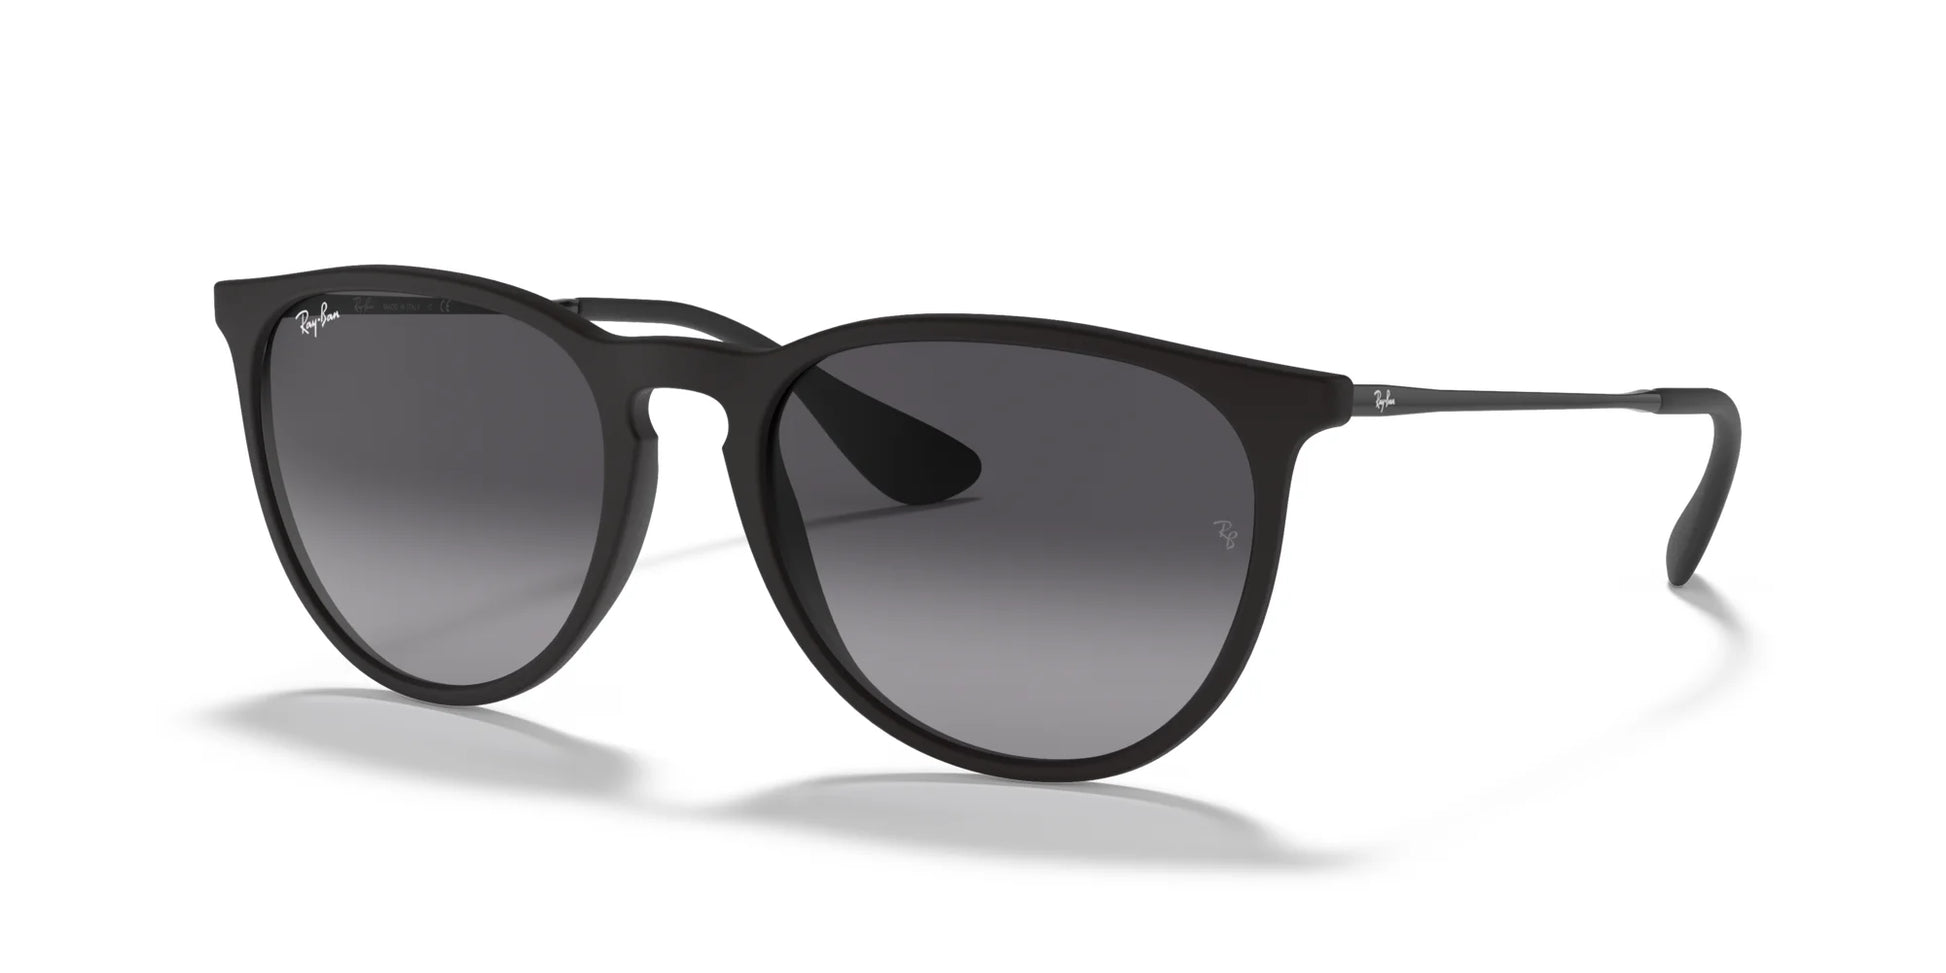 Ray-Ban ERIKA RB4171 Sunglasses Black / Grey Gradient